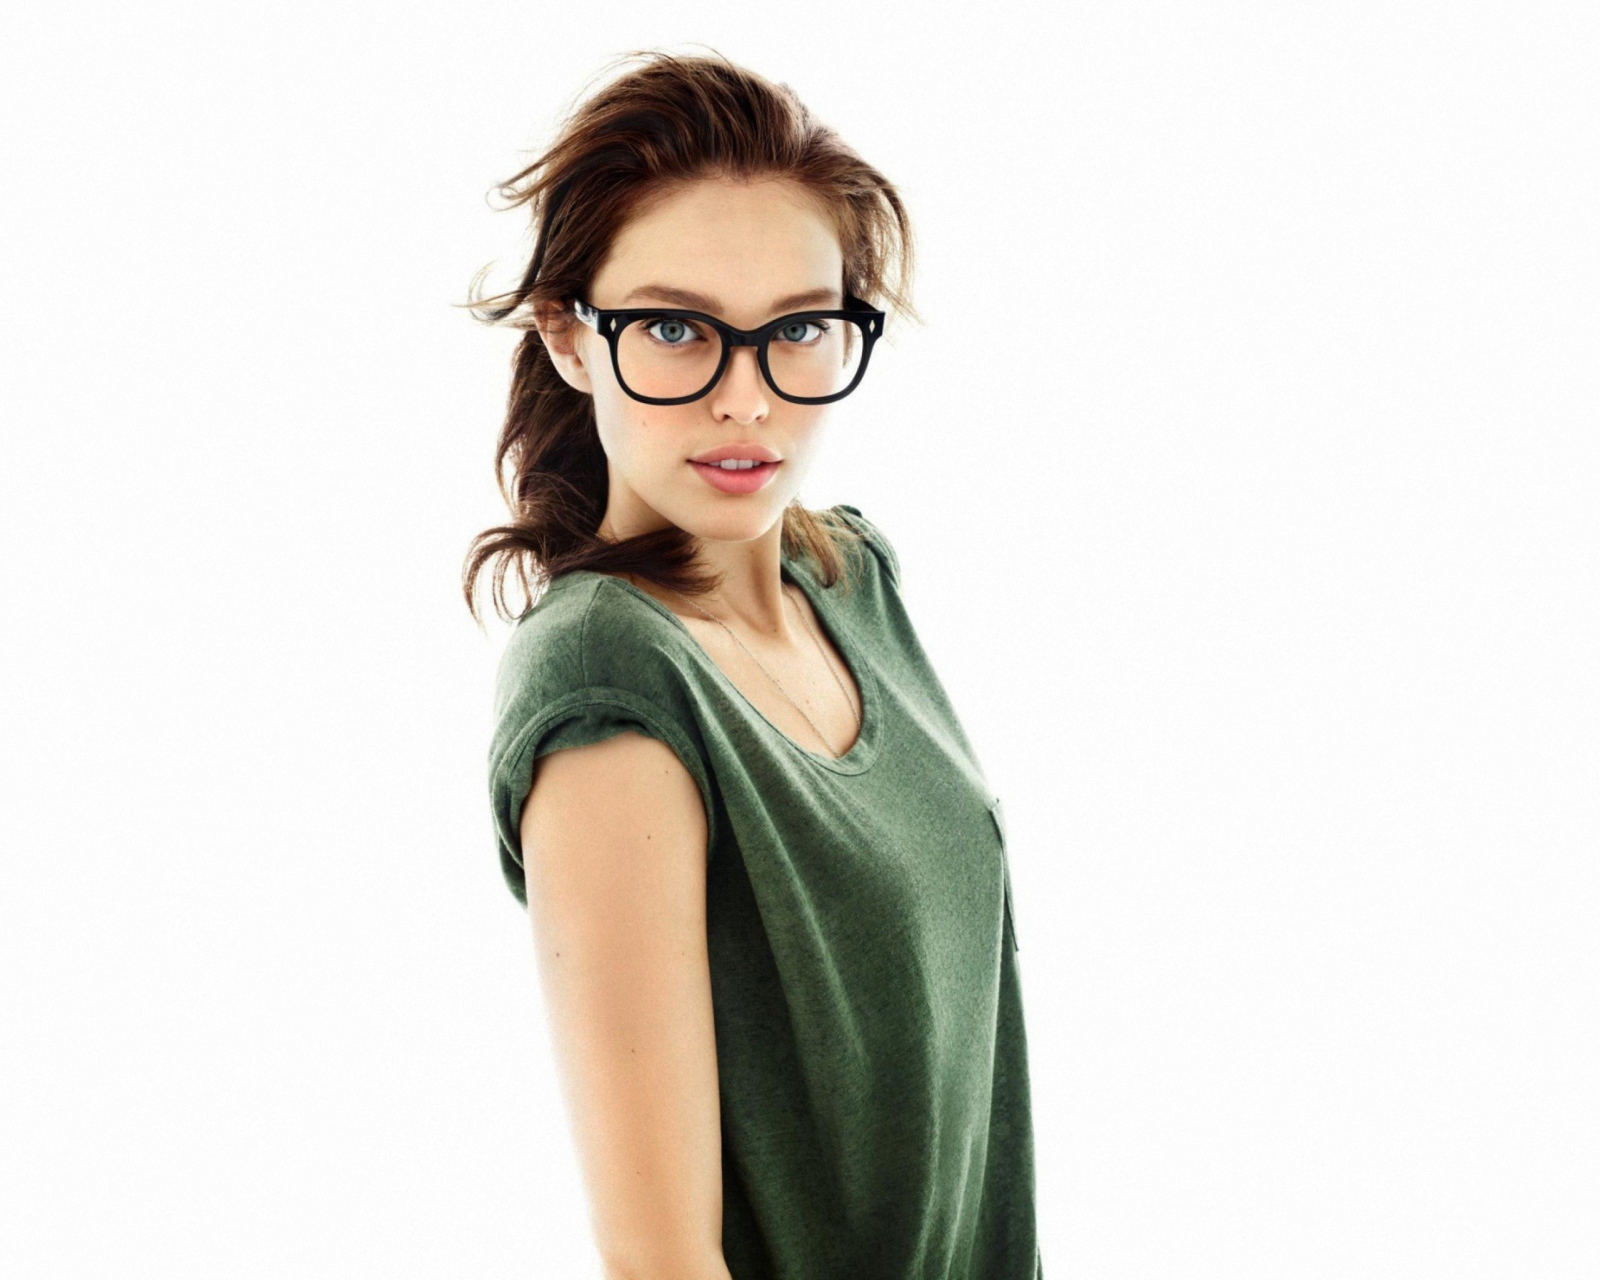 Very Cute Girl In Big Glasses wallpaper 1600x1280